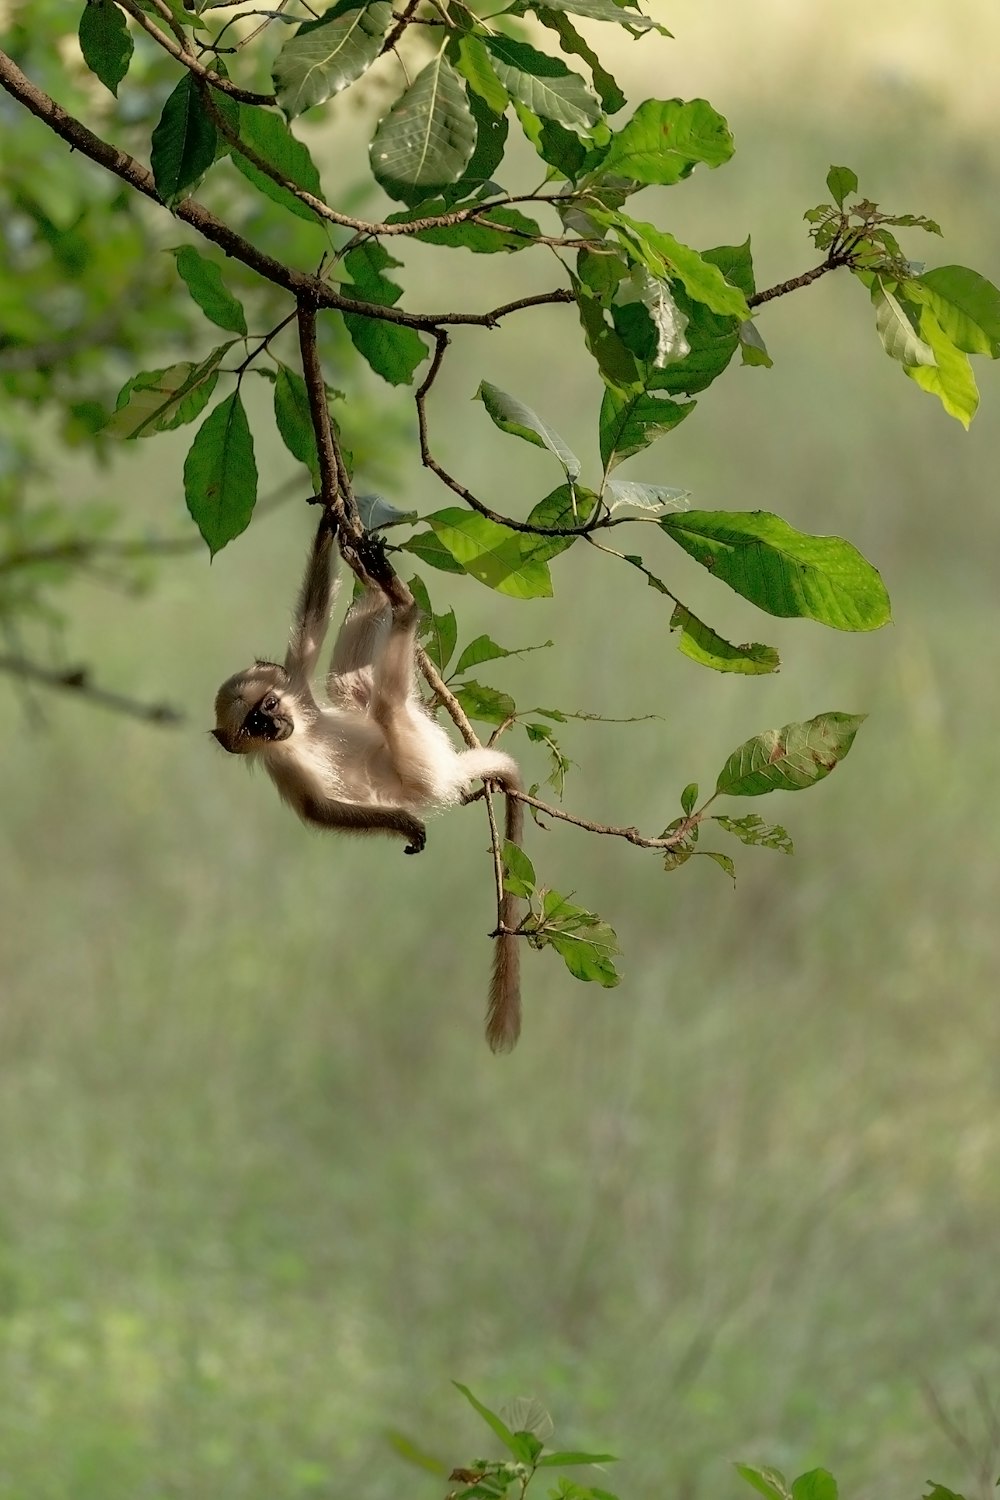 brown monkey on green leaf tree during daytime